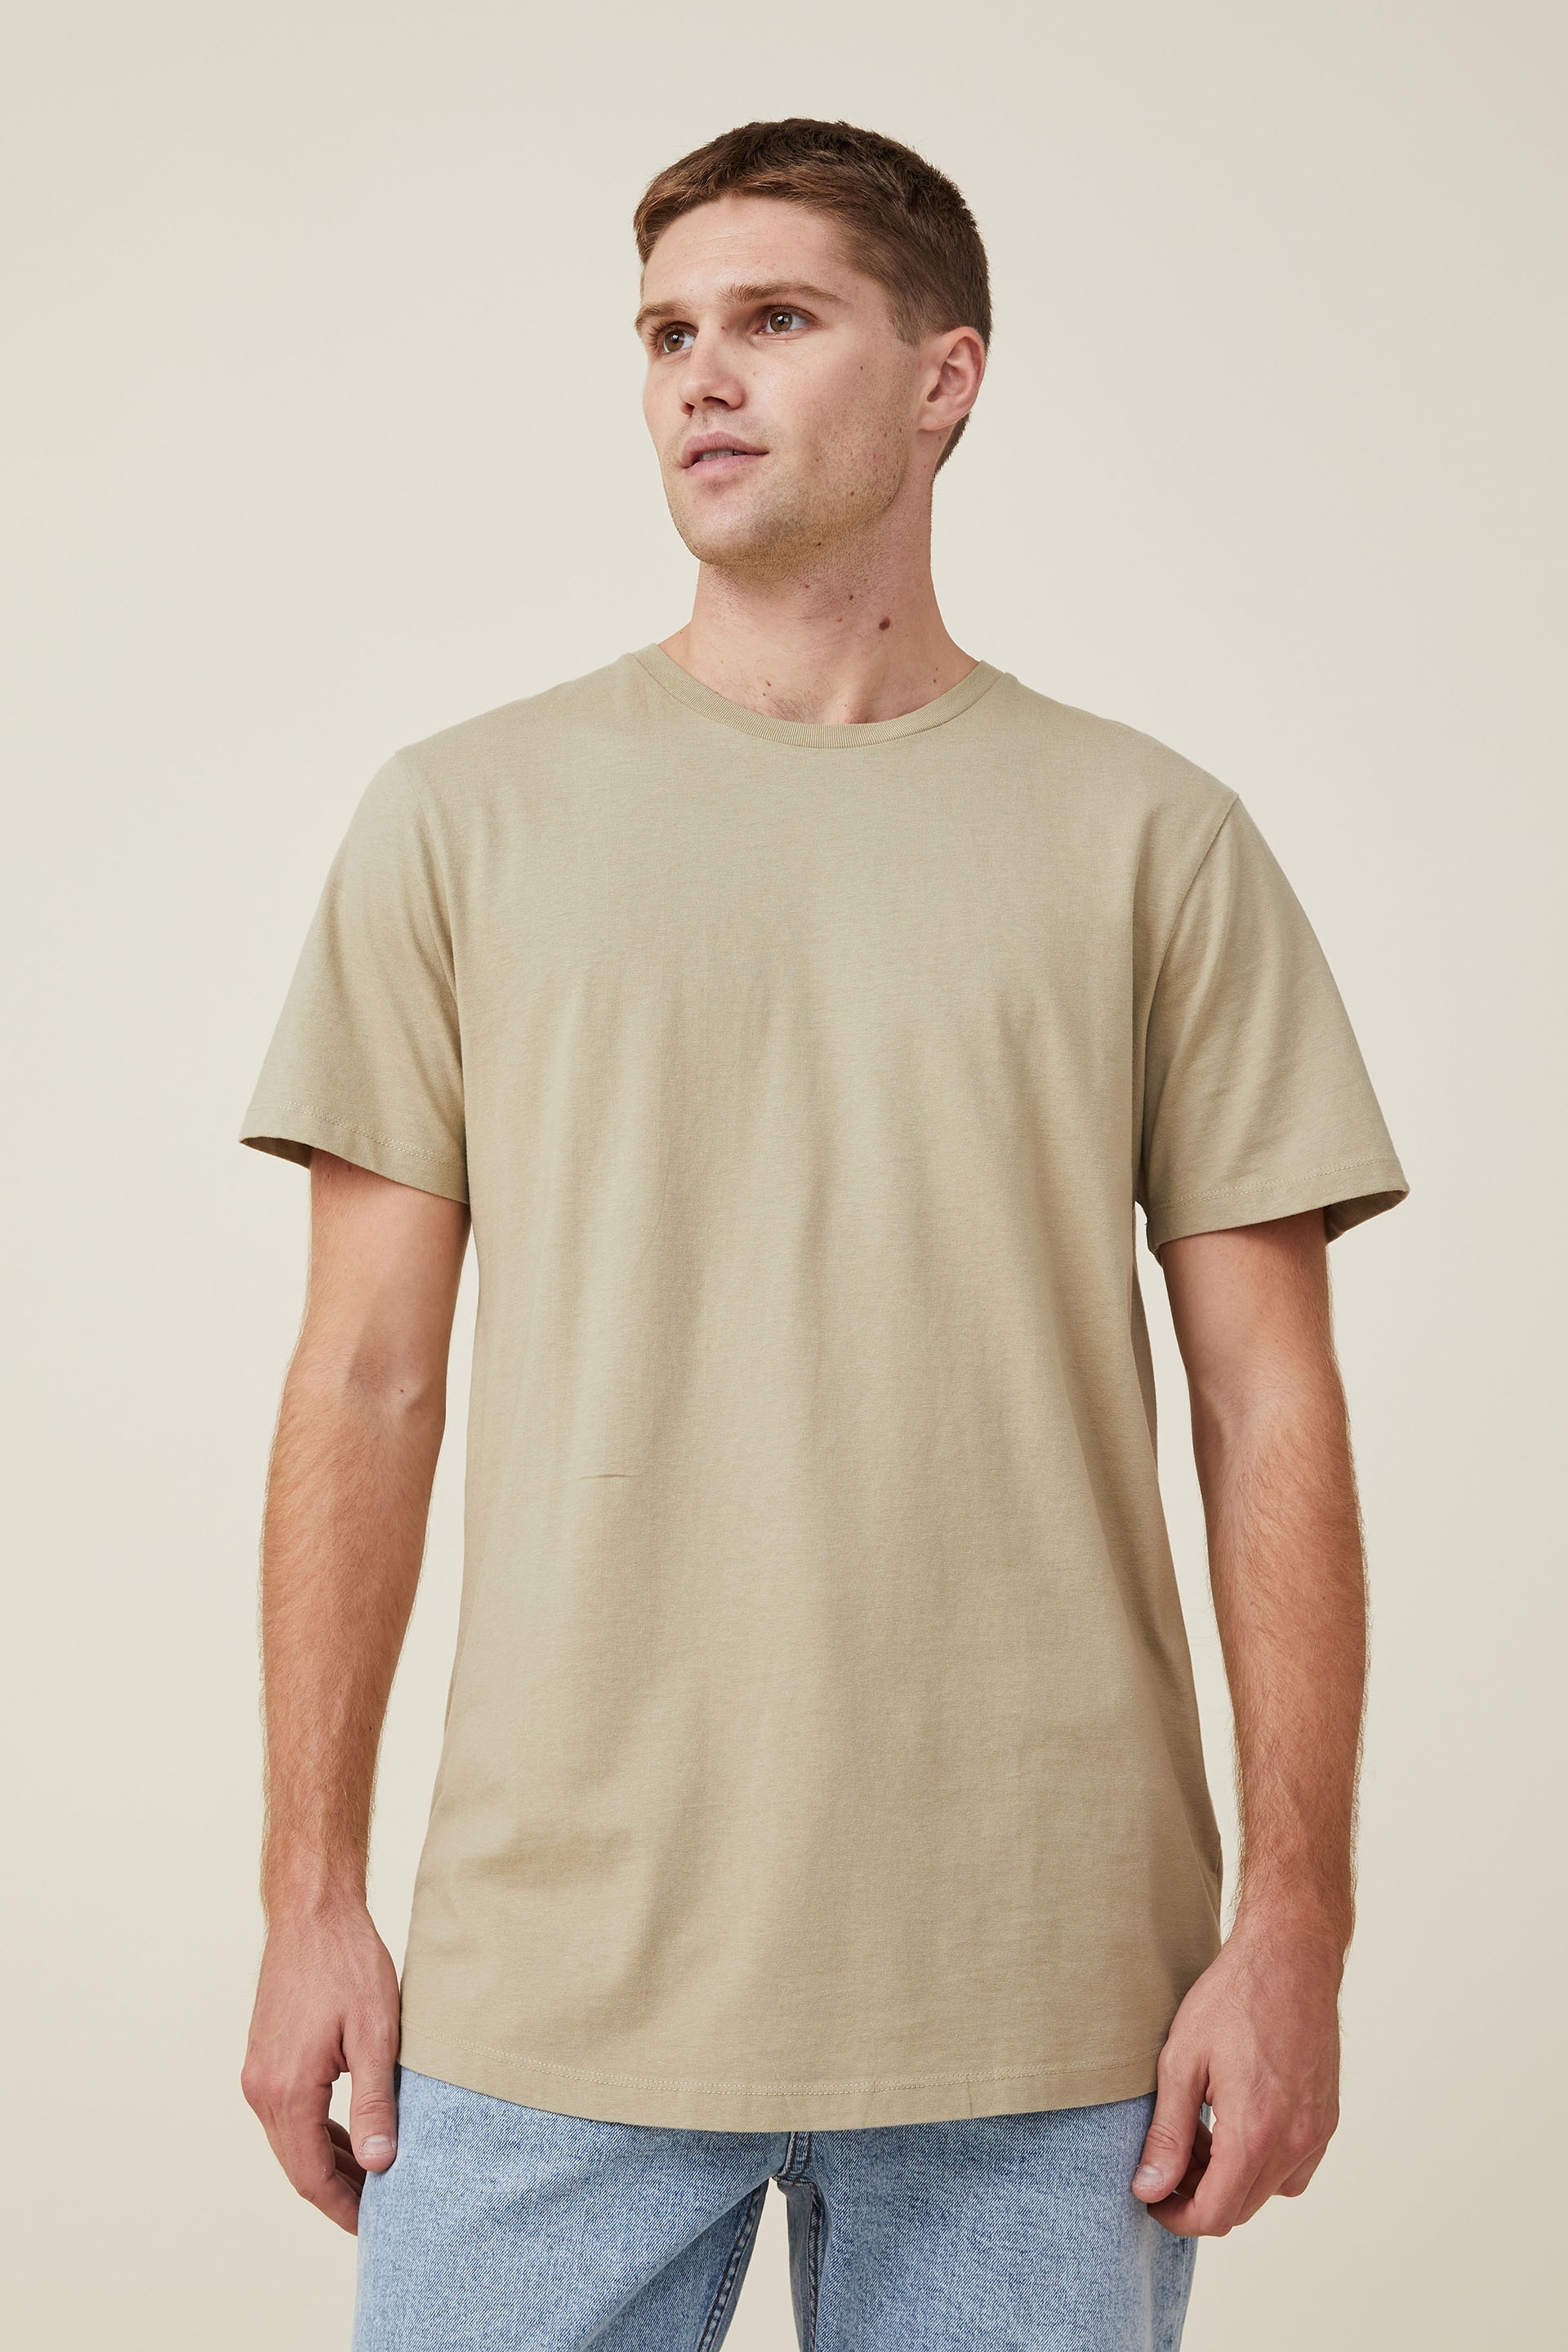 Cotton On Men - Organic Longline T-Shirt - Gravel stone